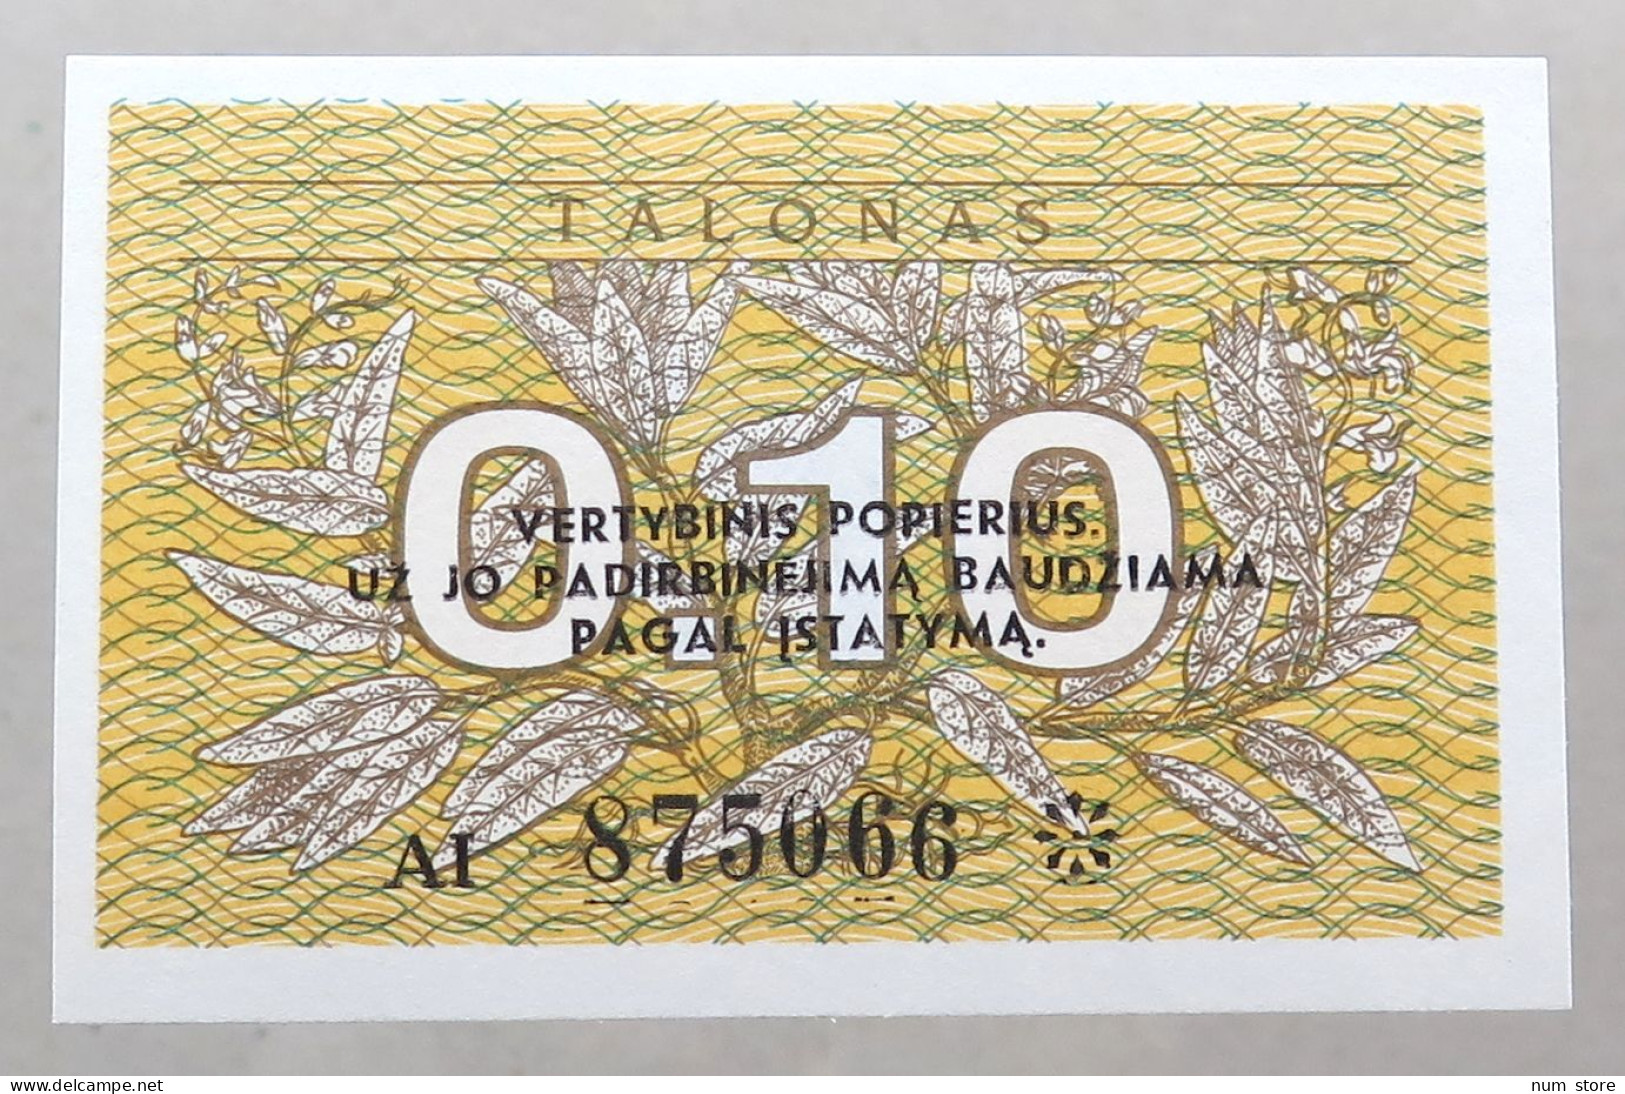 LITHUANIA 0.1 TALONAS 1991 TOP #alb050 0663 - Lituania